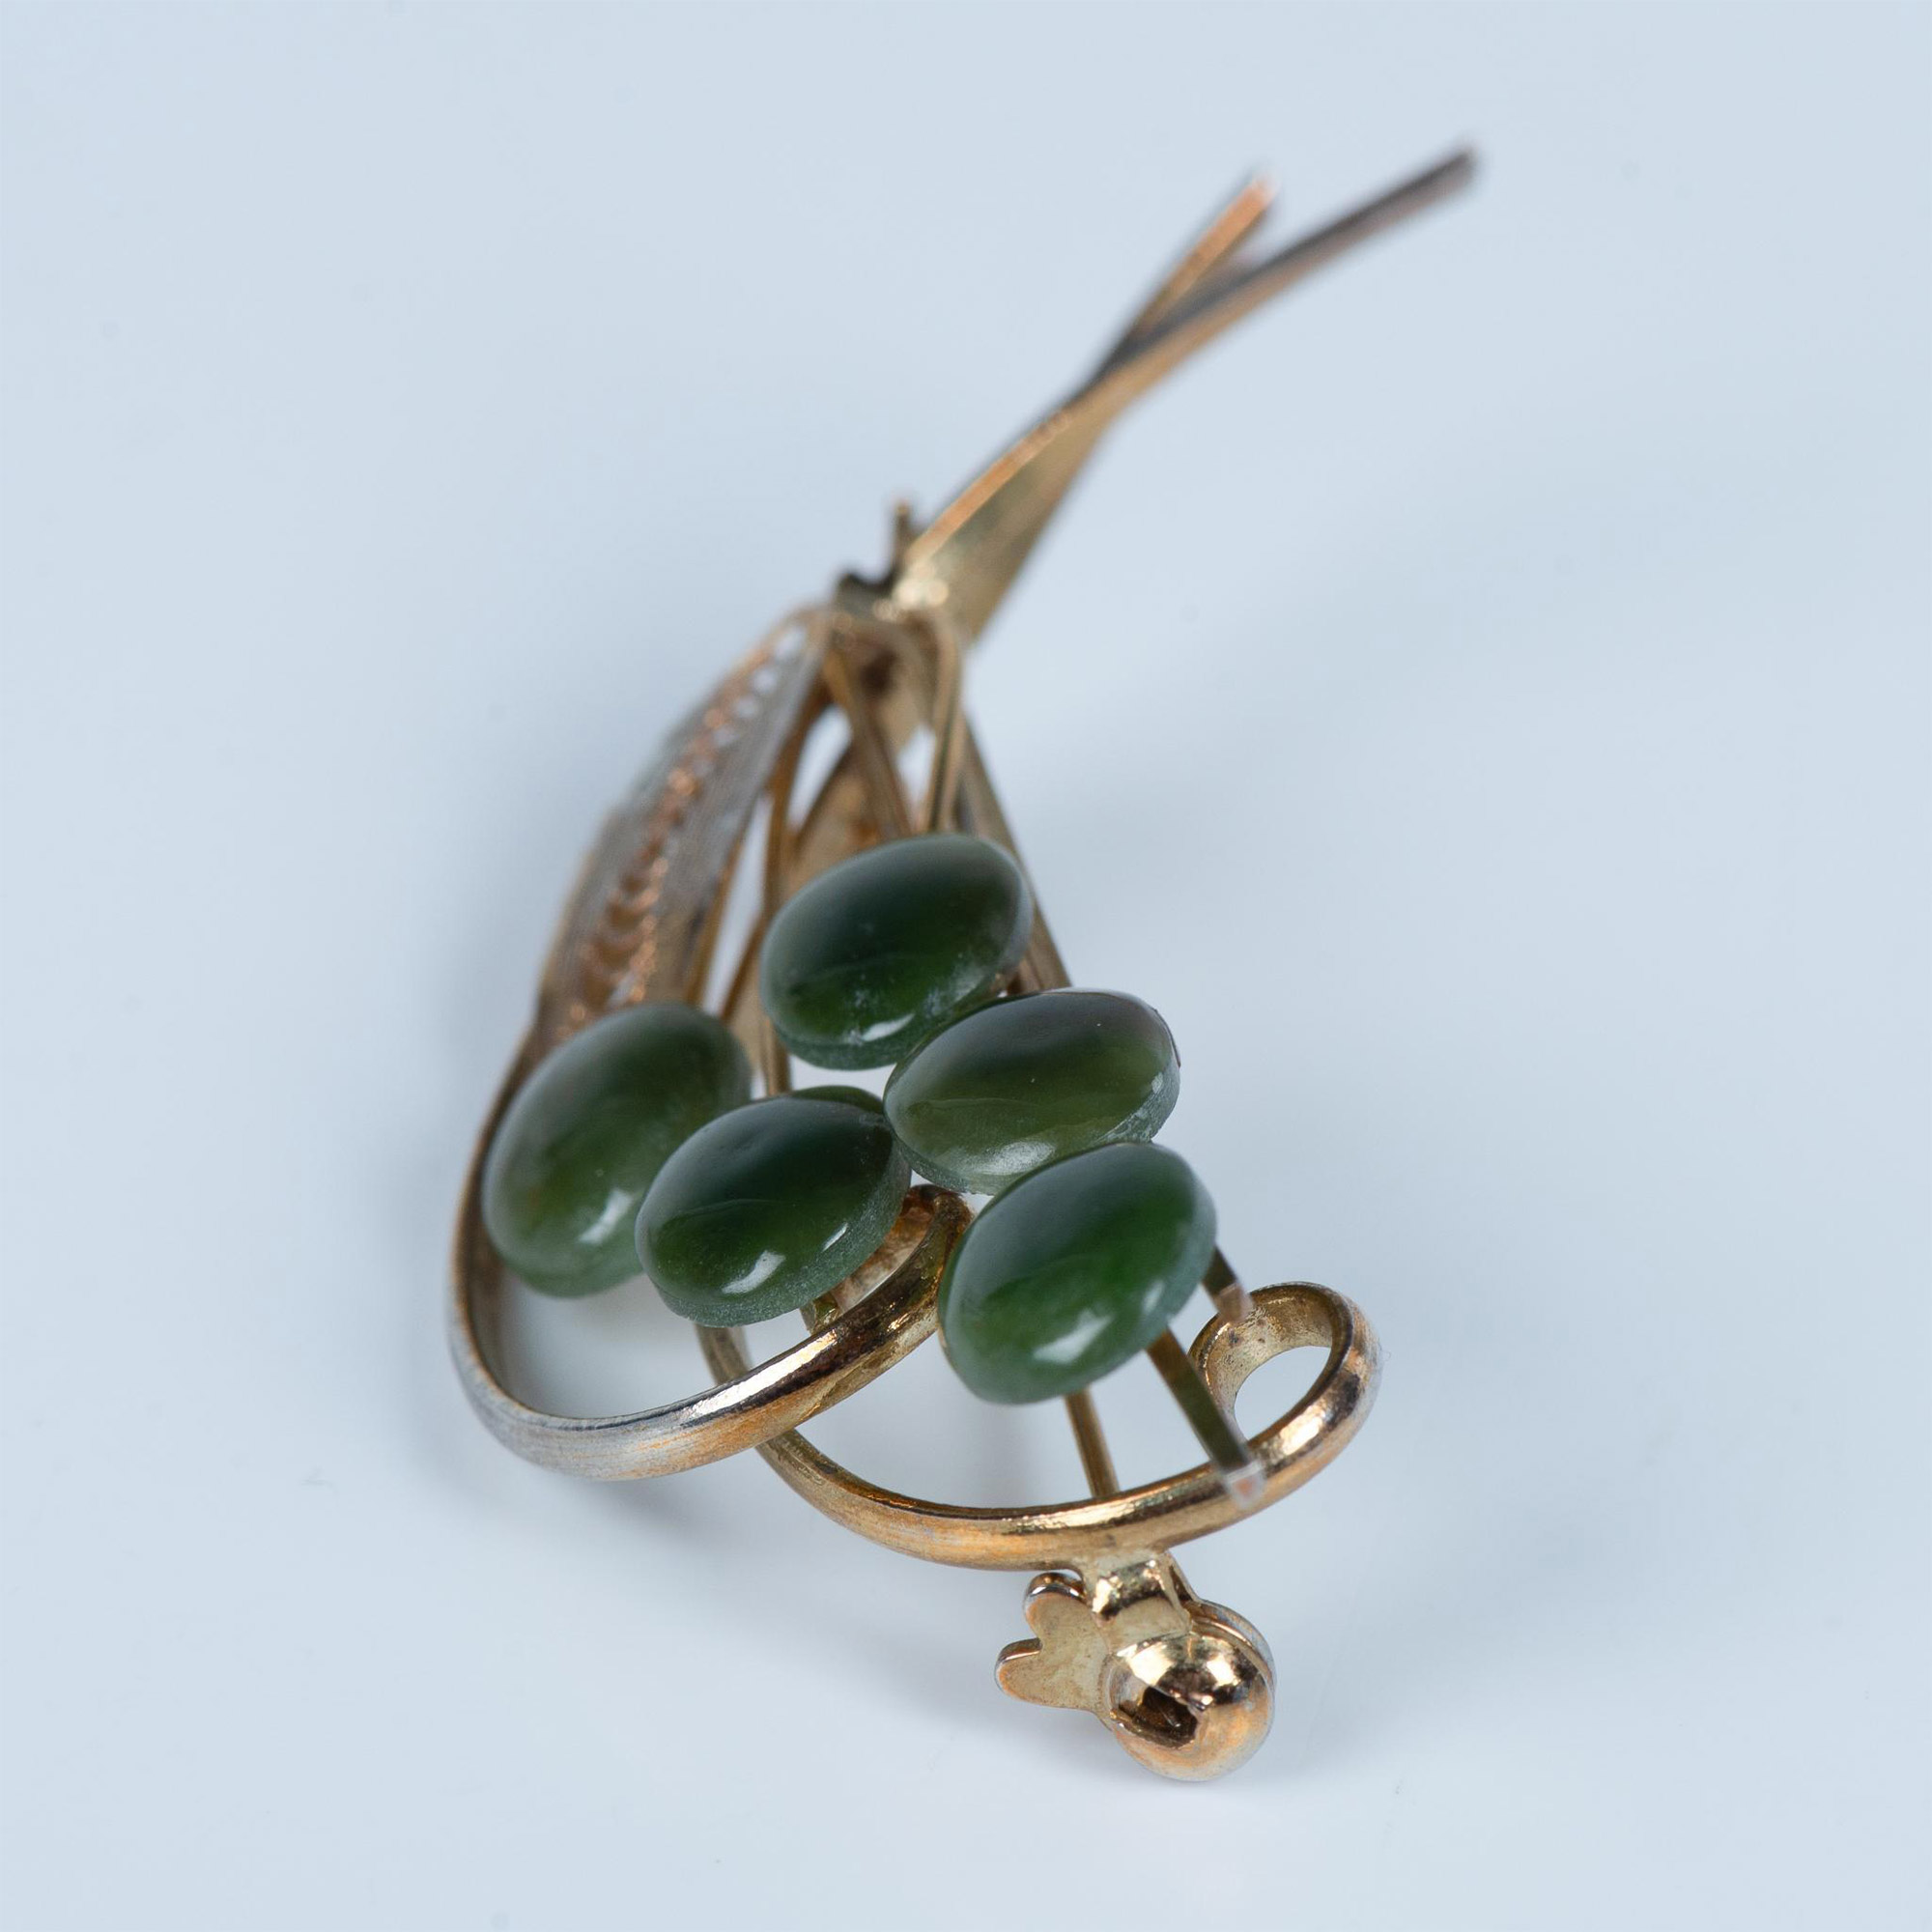 Vintage Gold Metal and Green Gemstone Floral Brooch - Image 2 of 4